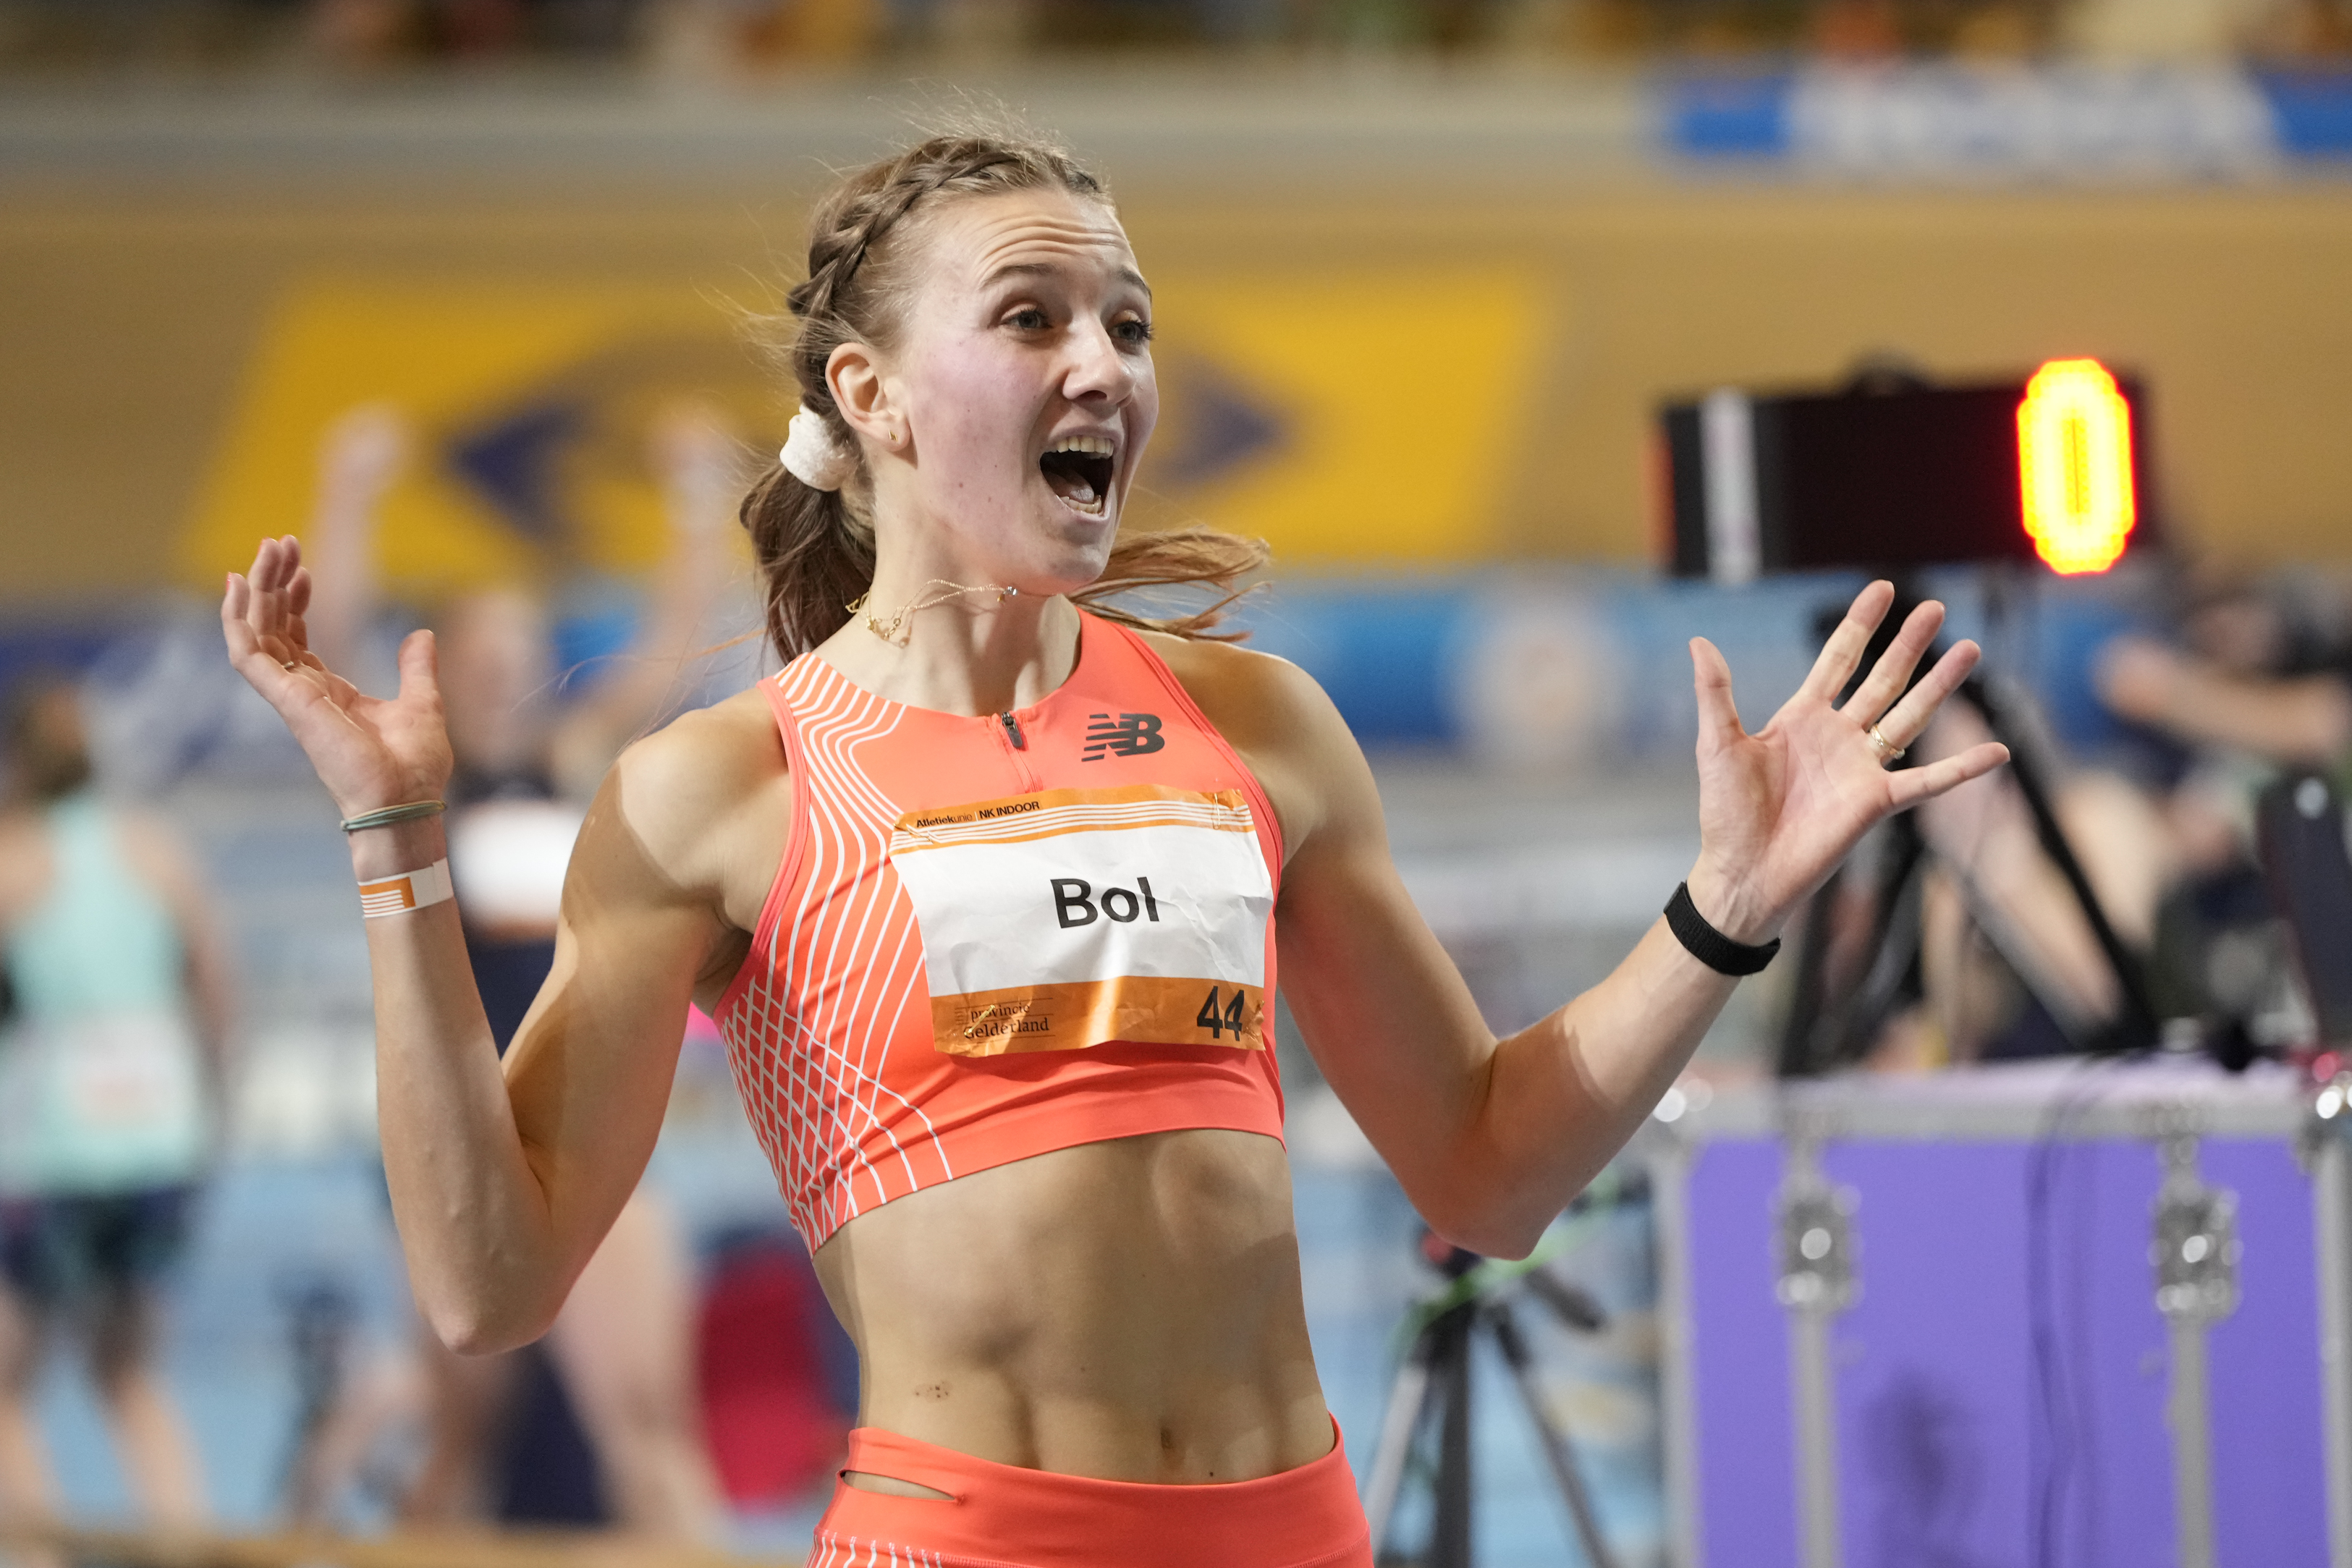 Femke Bol of the Netherlands wins the indoor women's 400-meter gold medal in the Dutch indoor championships in Apeldoorn, the Netherlands, February 19, 2023. /CFP